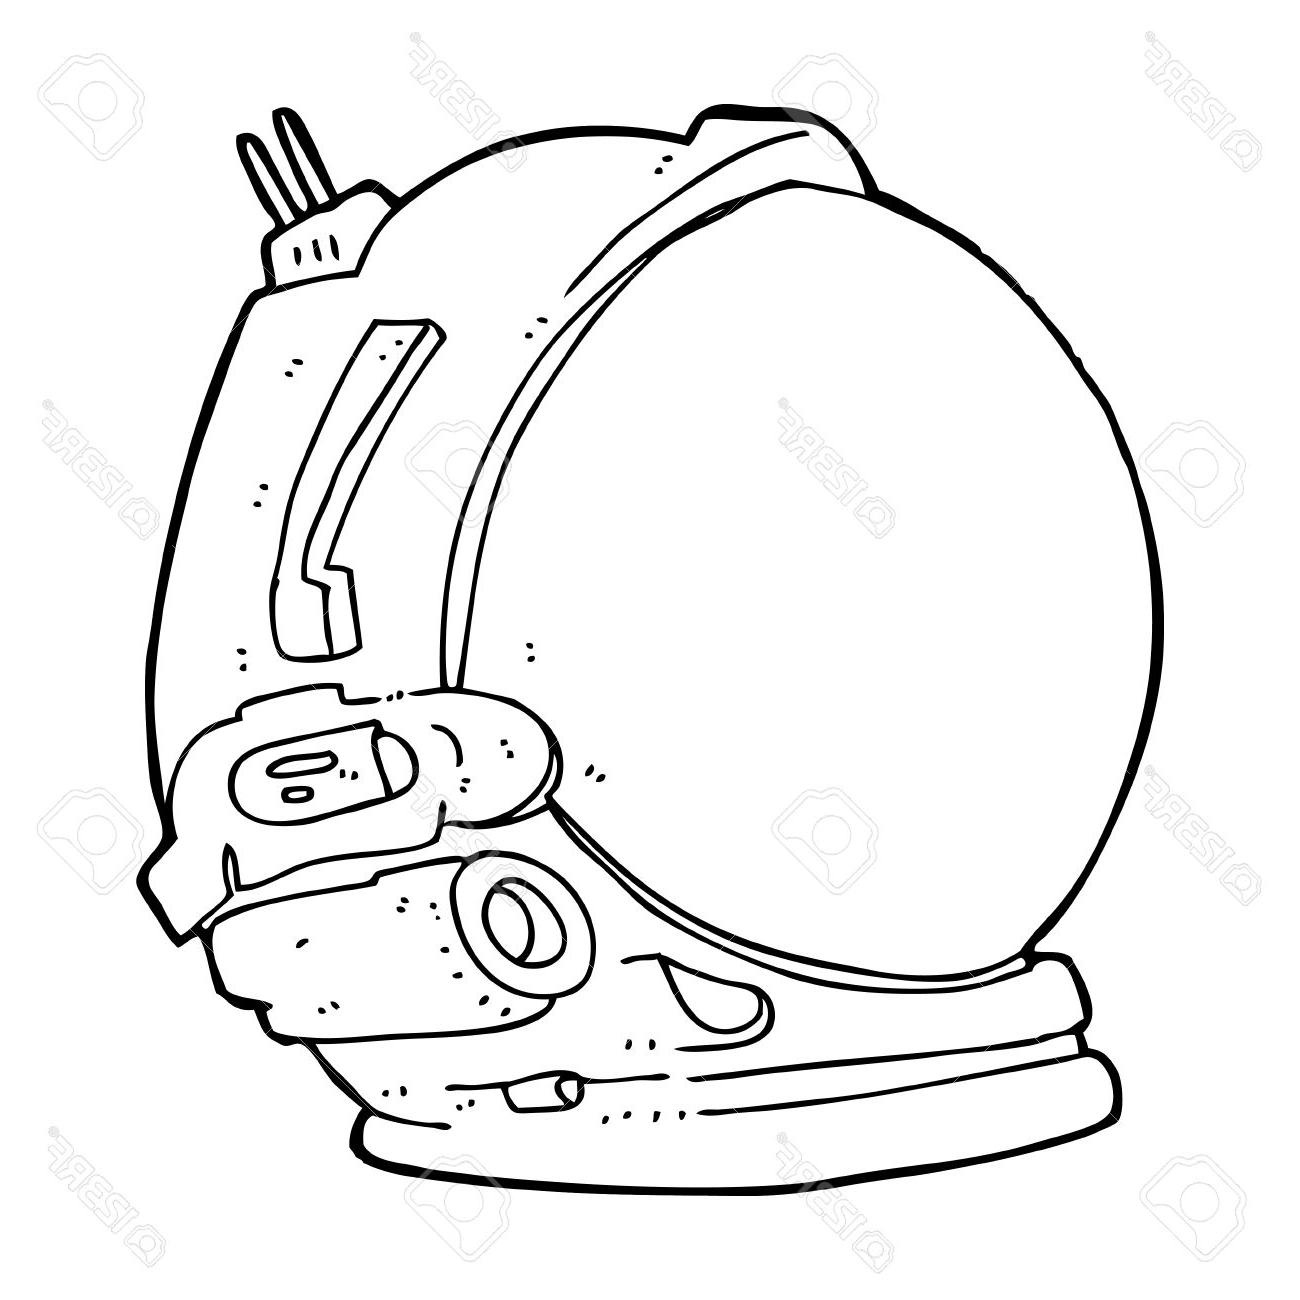 Astronaut clipart astronaut helmet, Astronaut astronaut